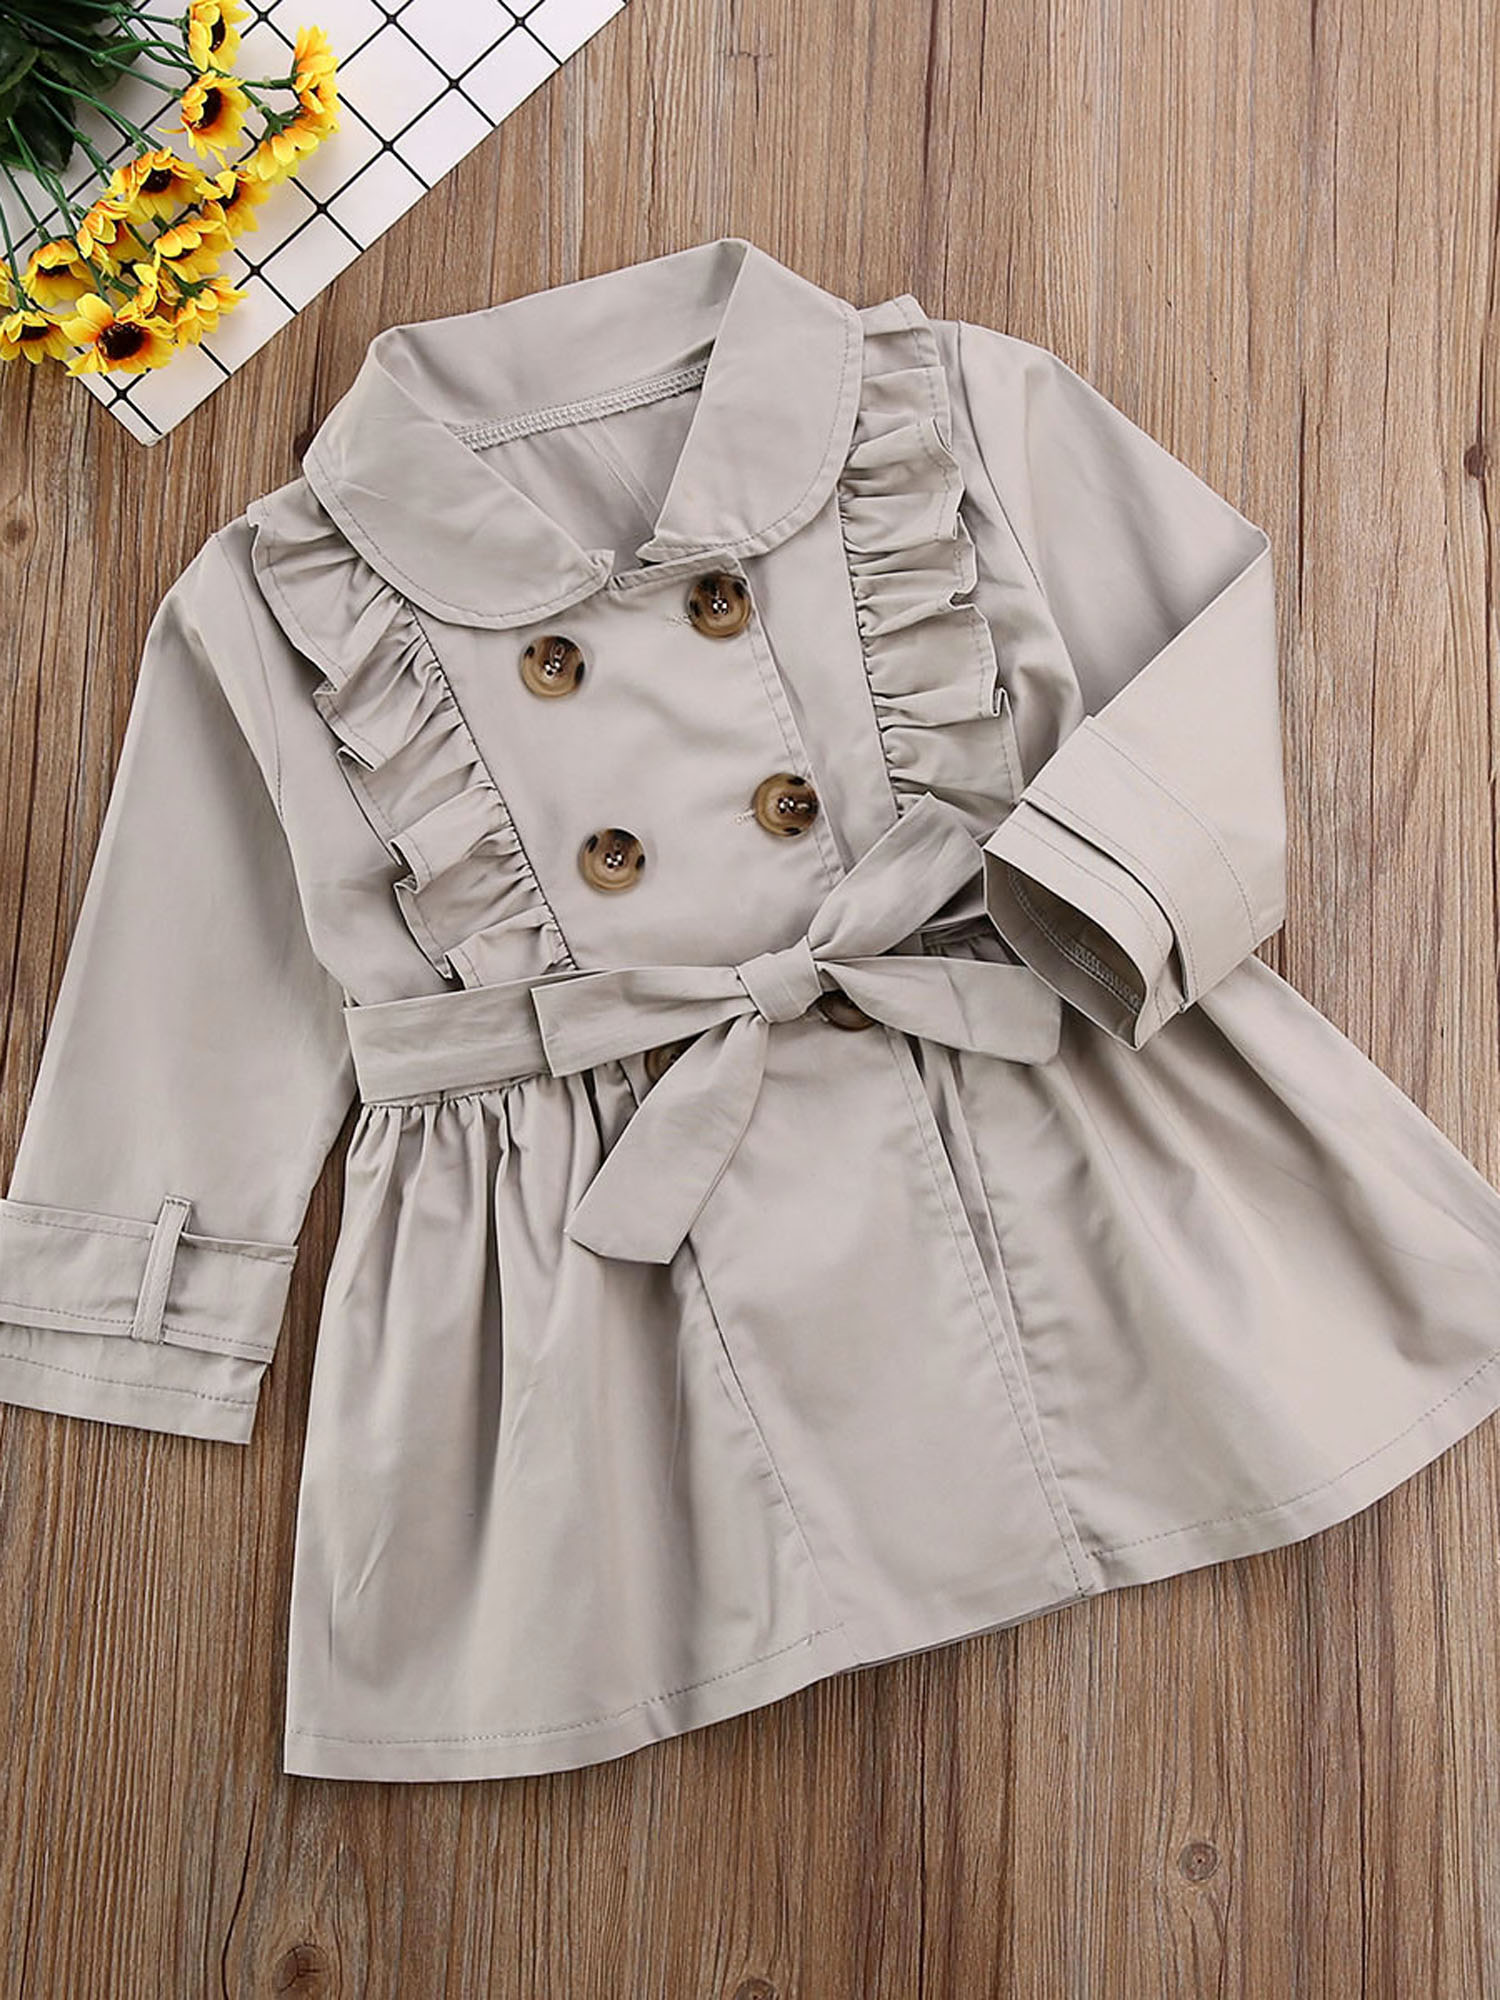 Xingqing Toddler Baby Girl Trench Coat Casual Ruffle Jacket Windbreaker Outerwear - image 2 of 6